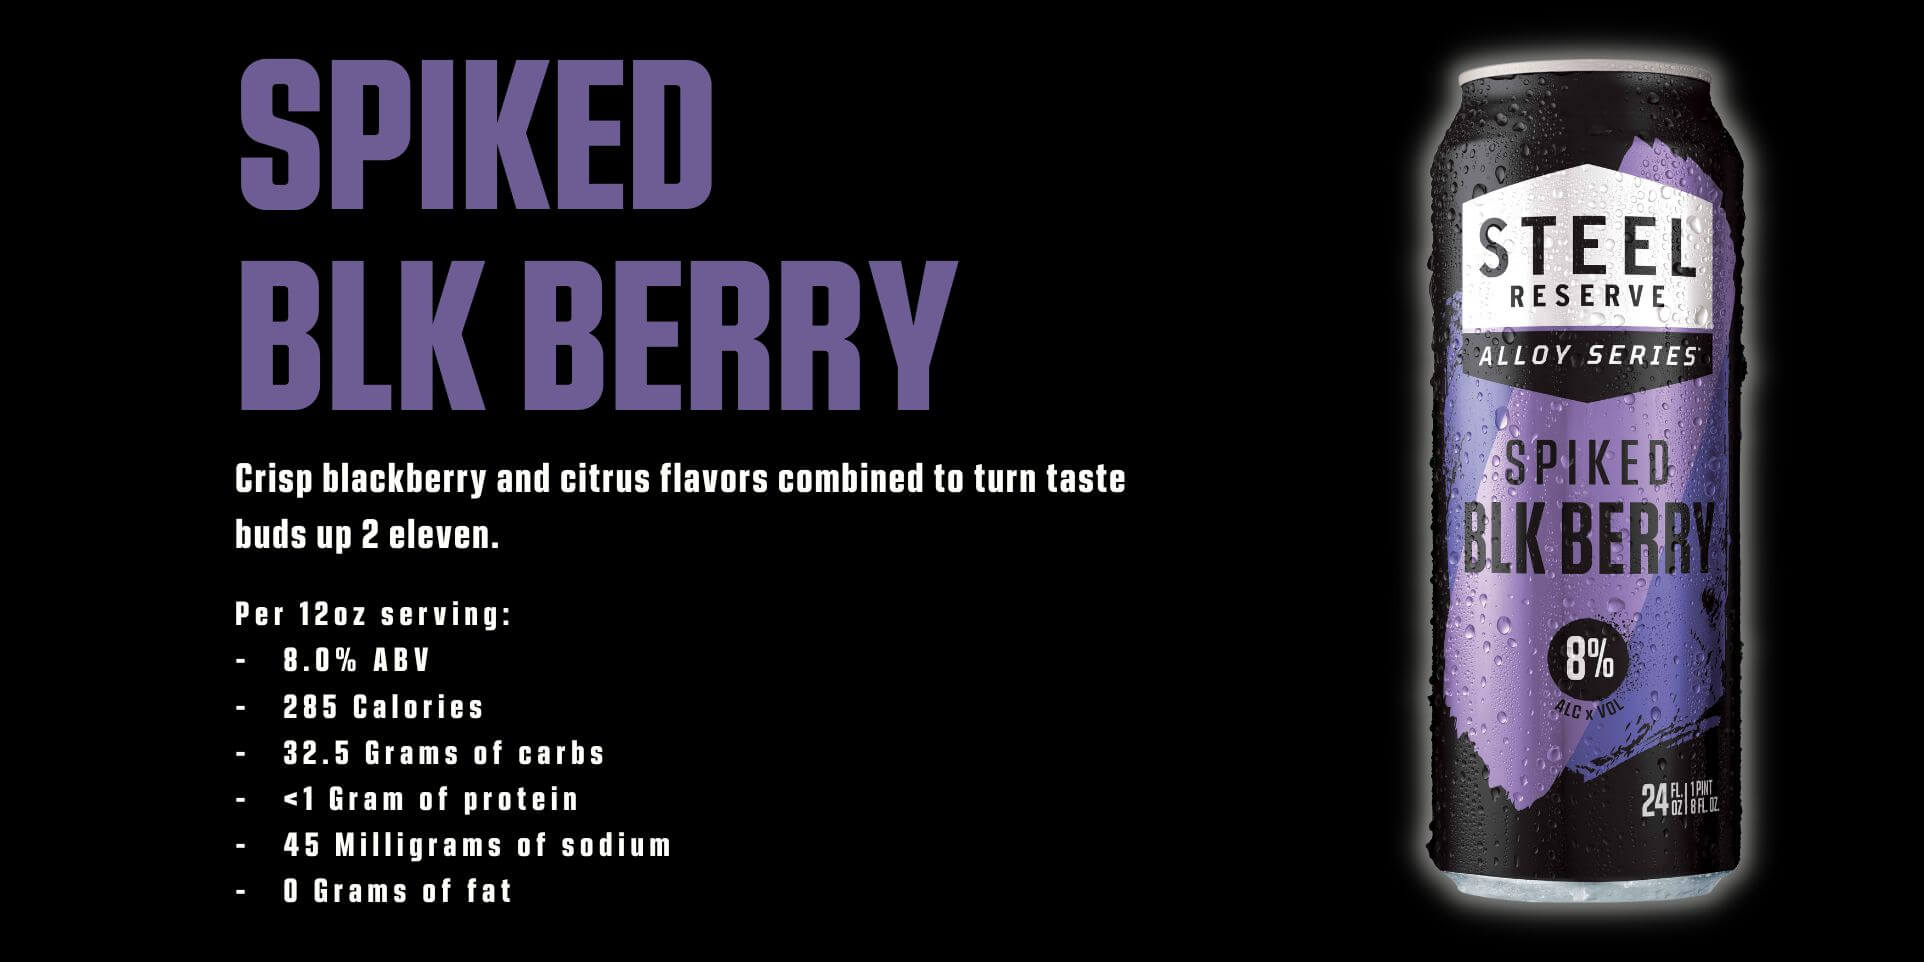 Spiked Blk Berry description